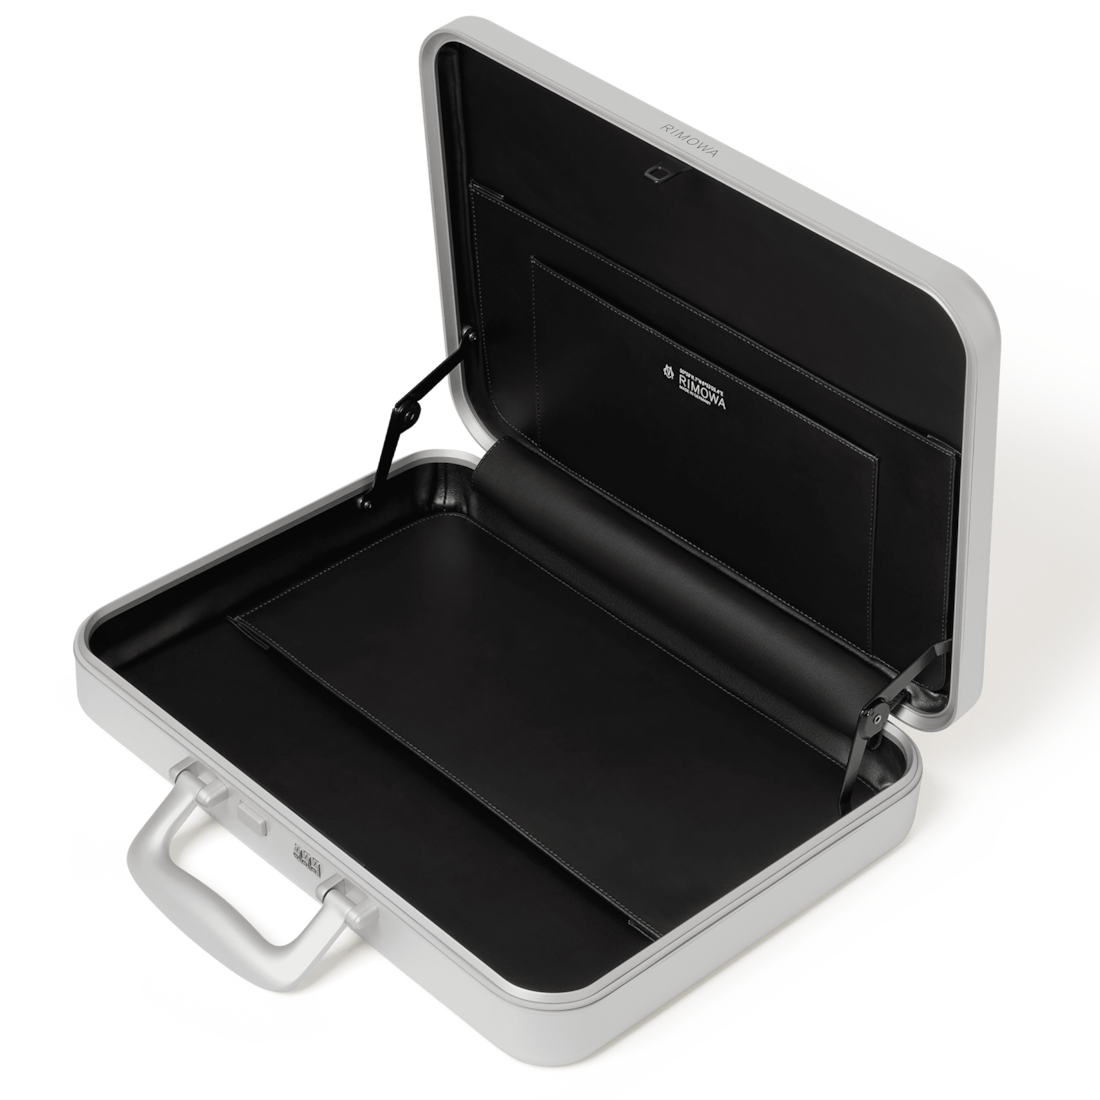 Rimowa Attache case Suitcase Aluminum Silver